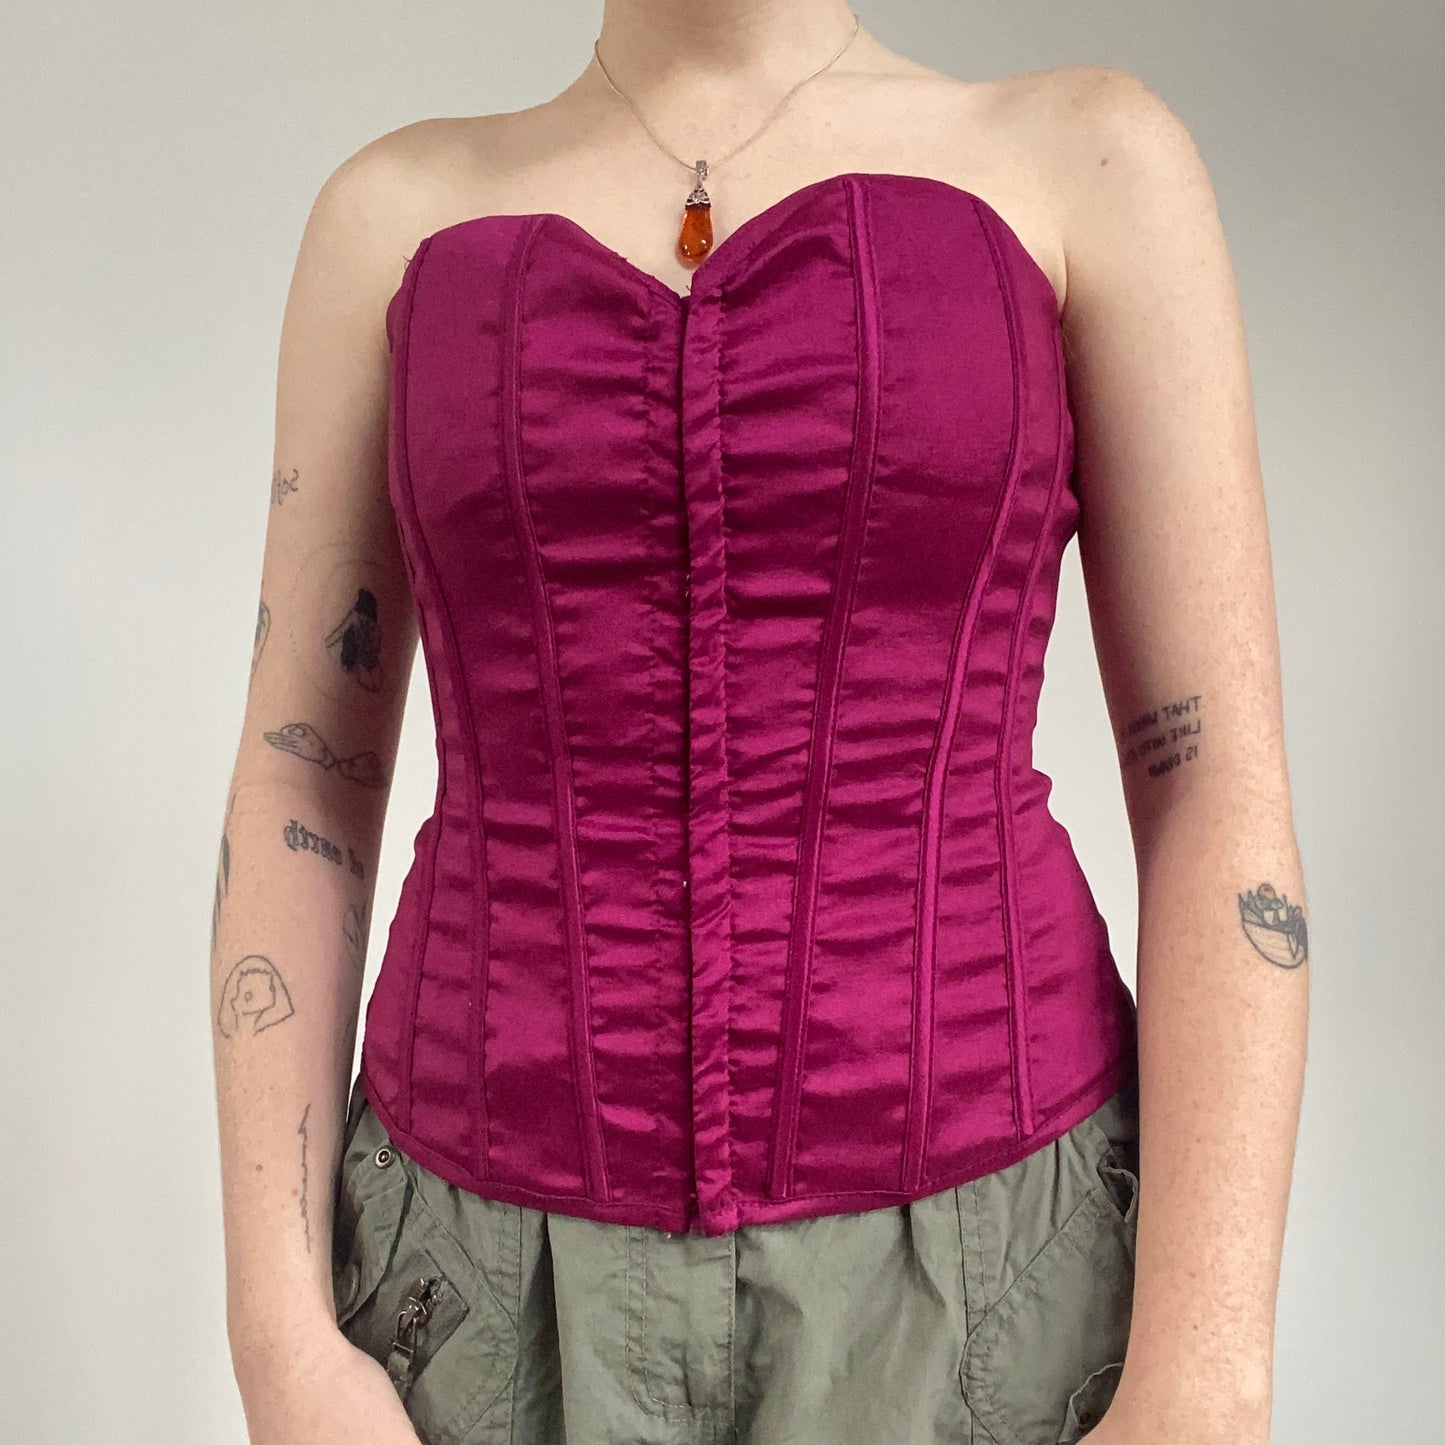 Pink corset - size 10/12